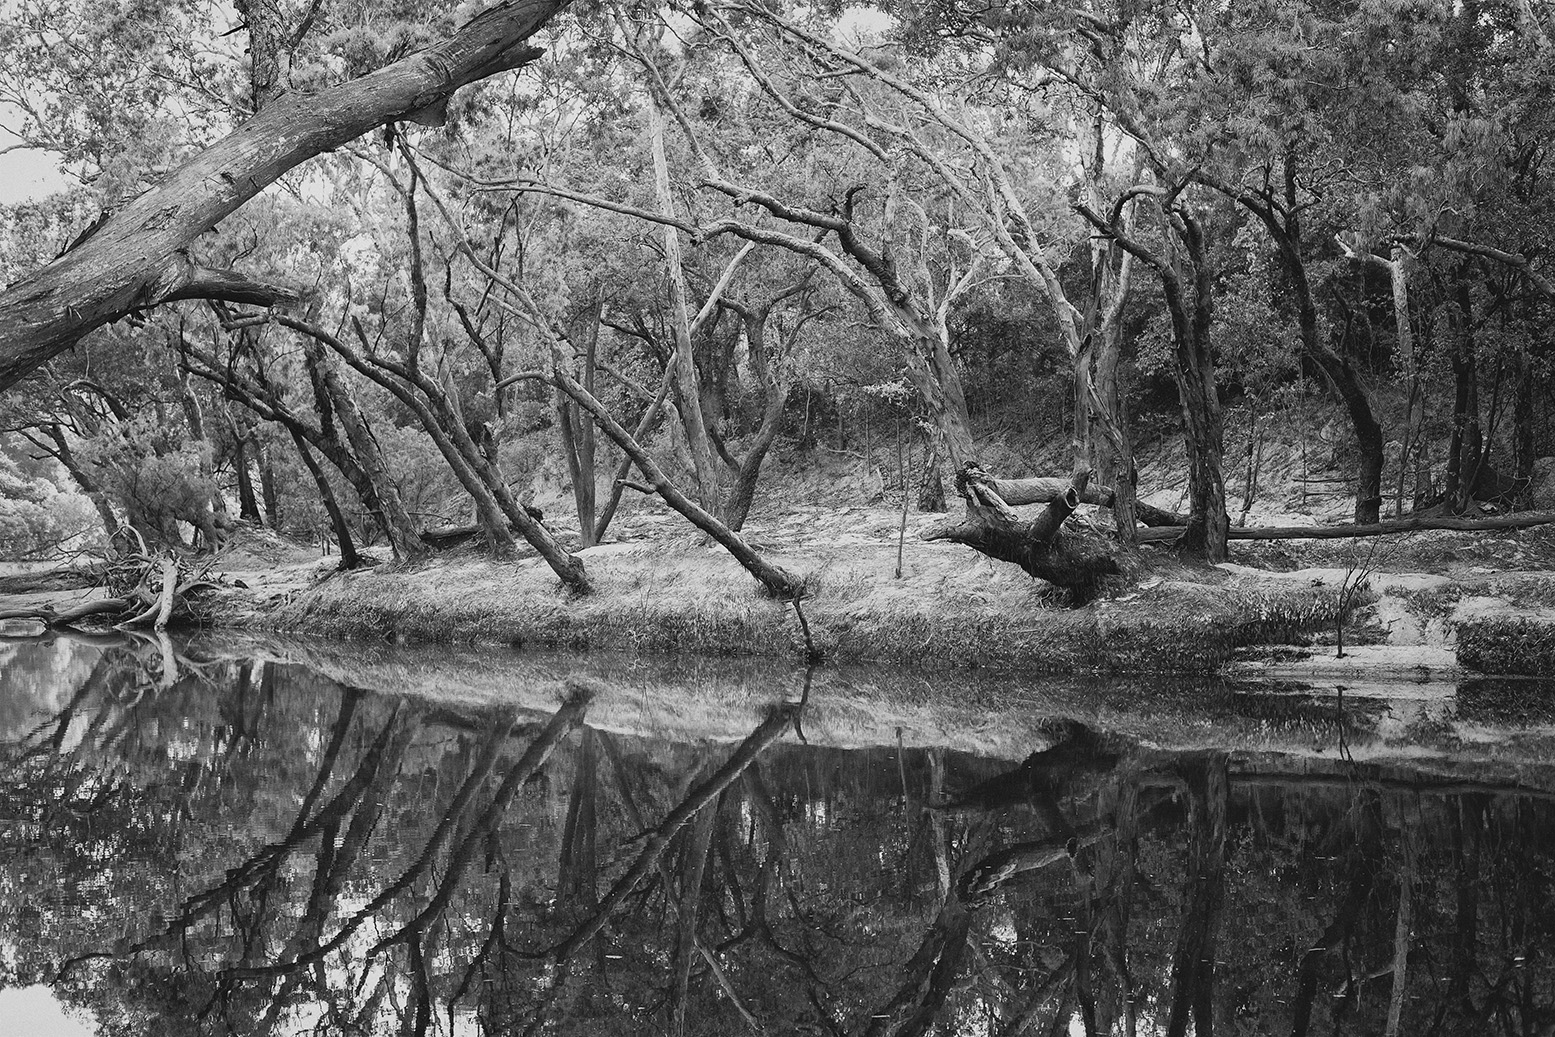 Steve Irwin Wildlife Reserve